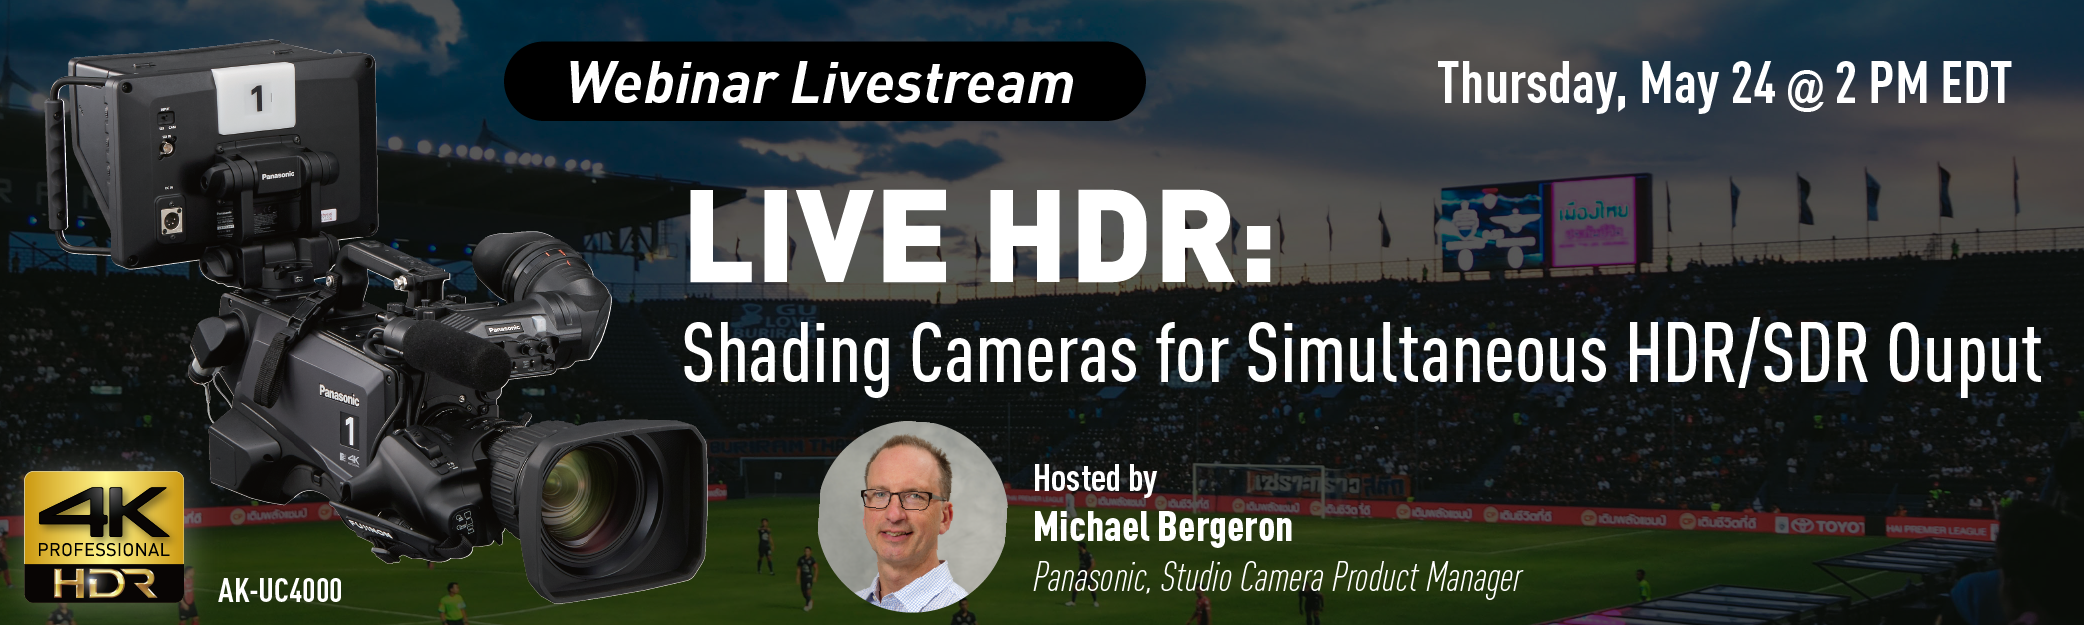 Live HDR webinar